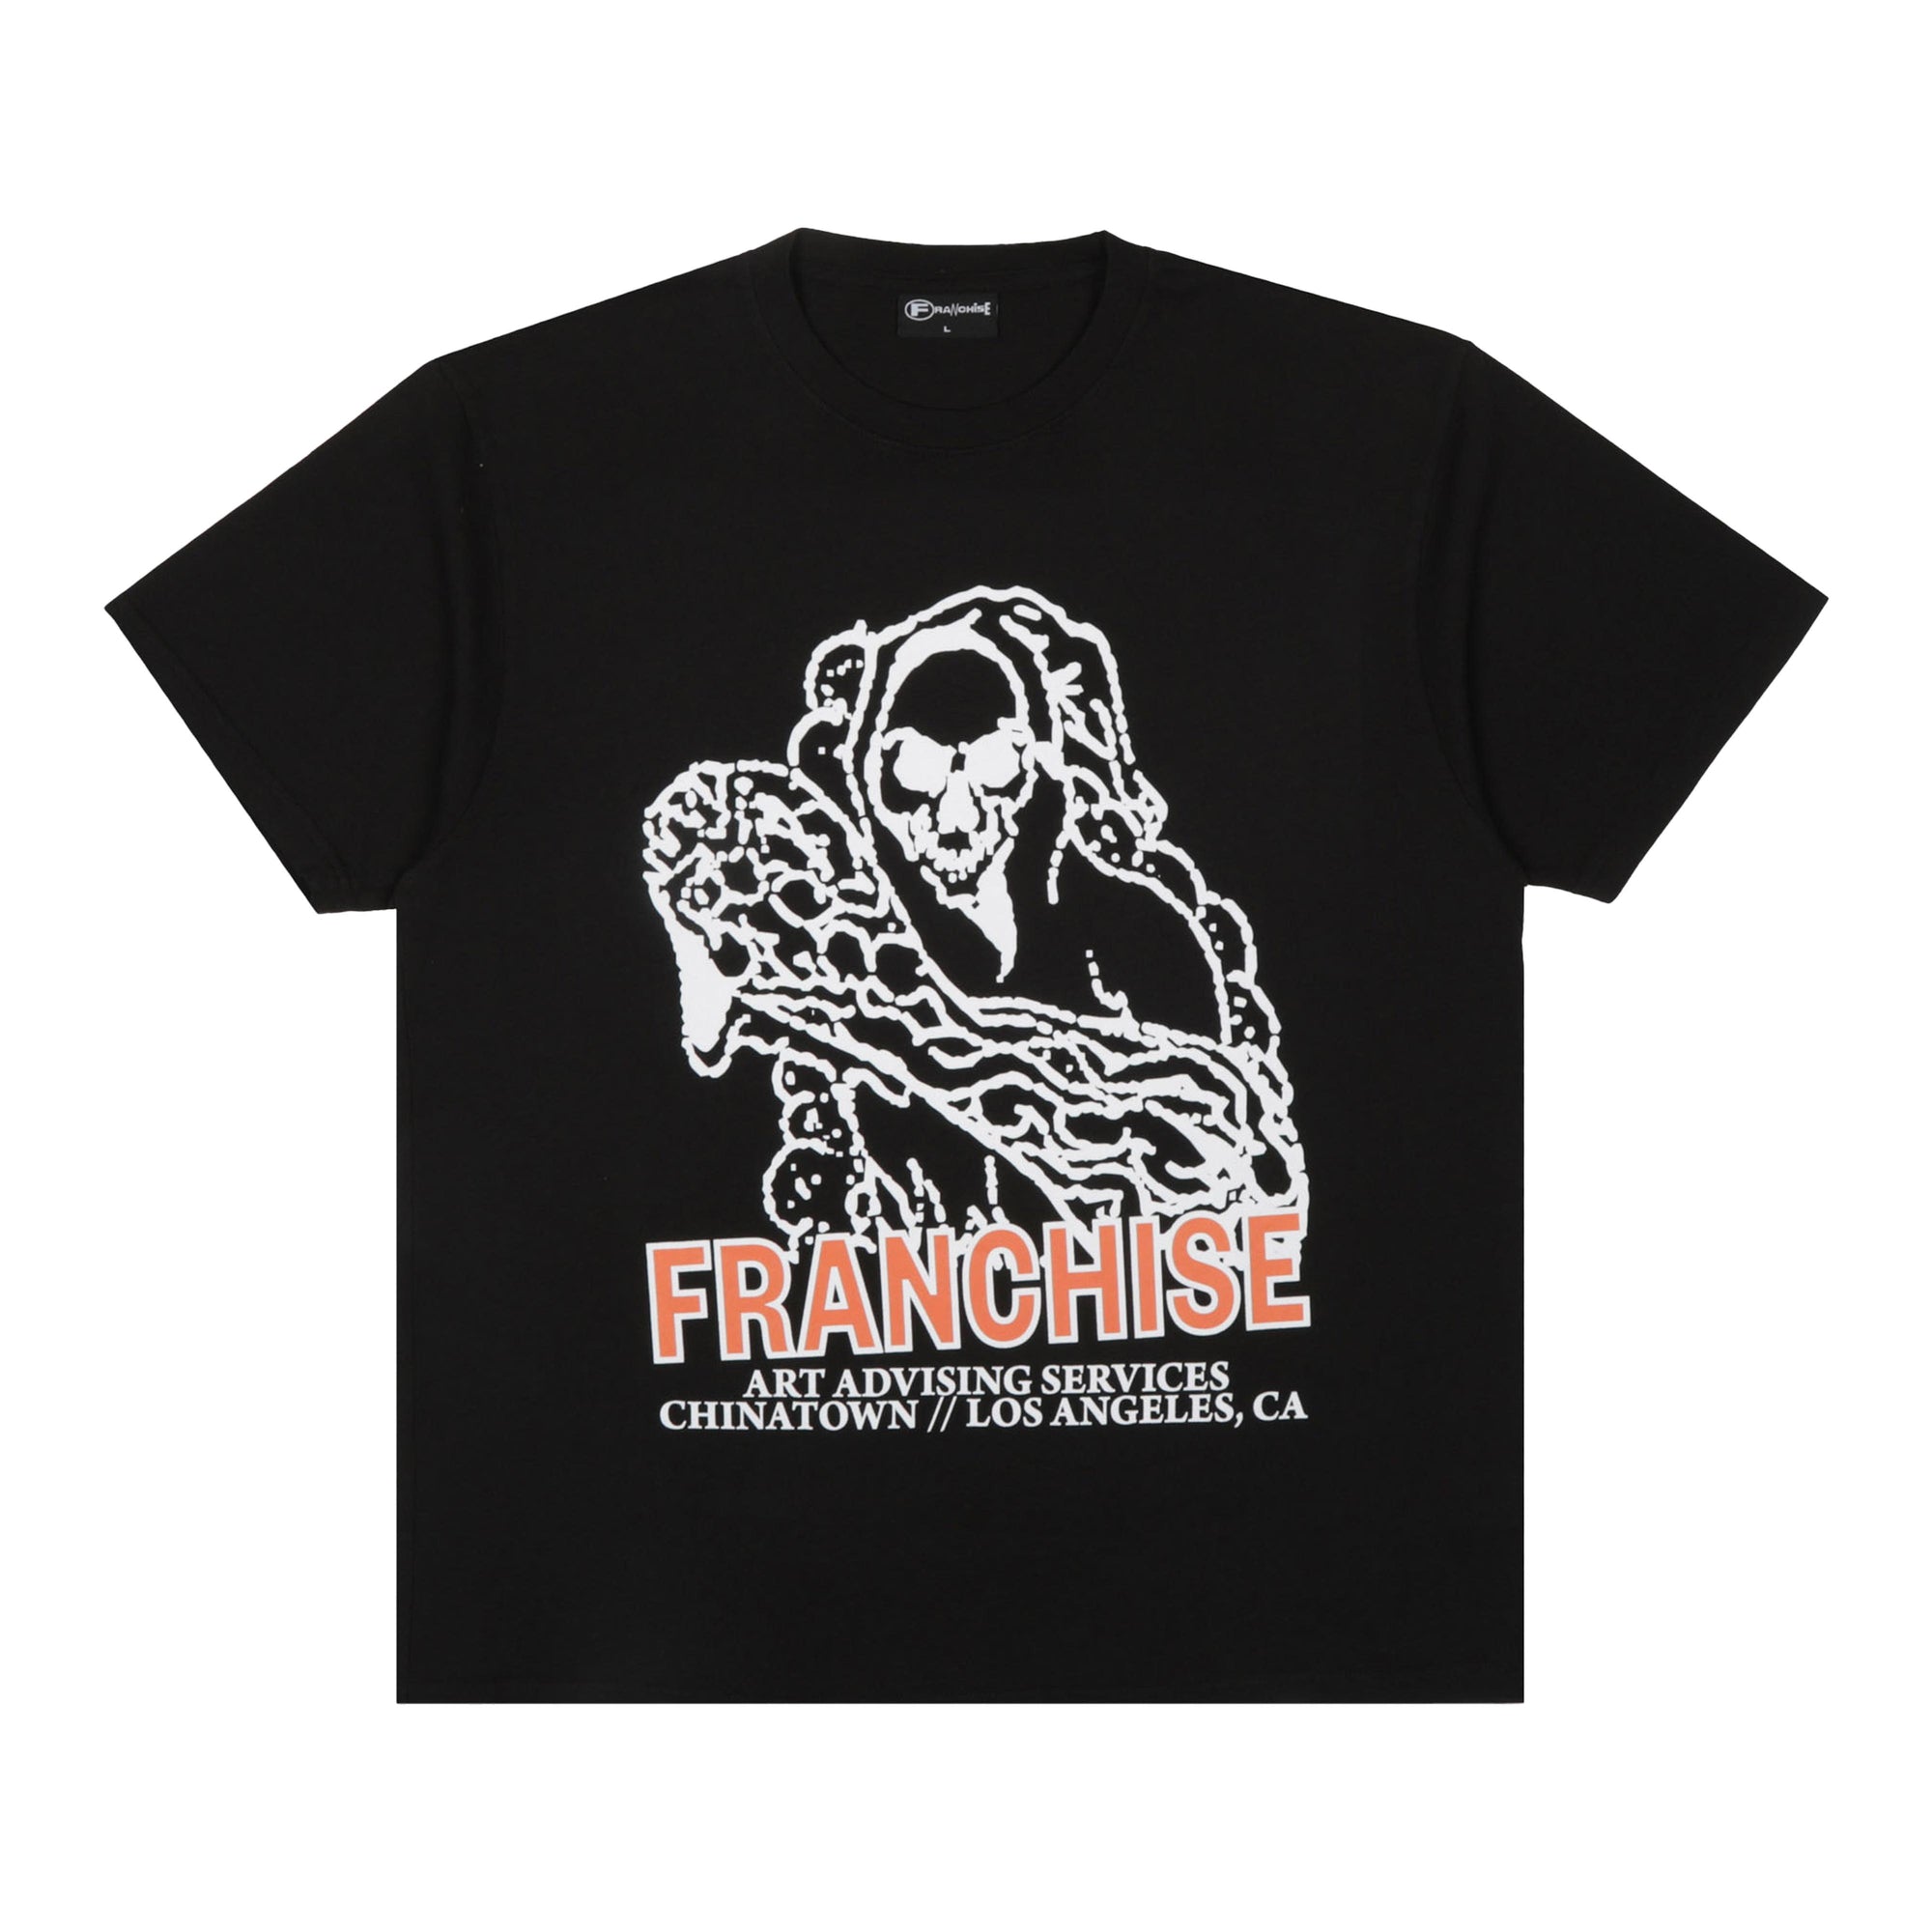 Franchise - Art Advising Services T-Shirt - (Black) view 1